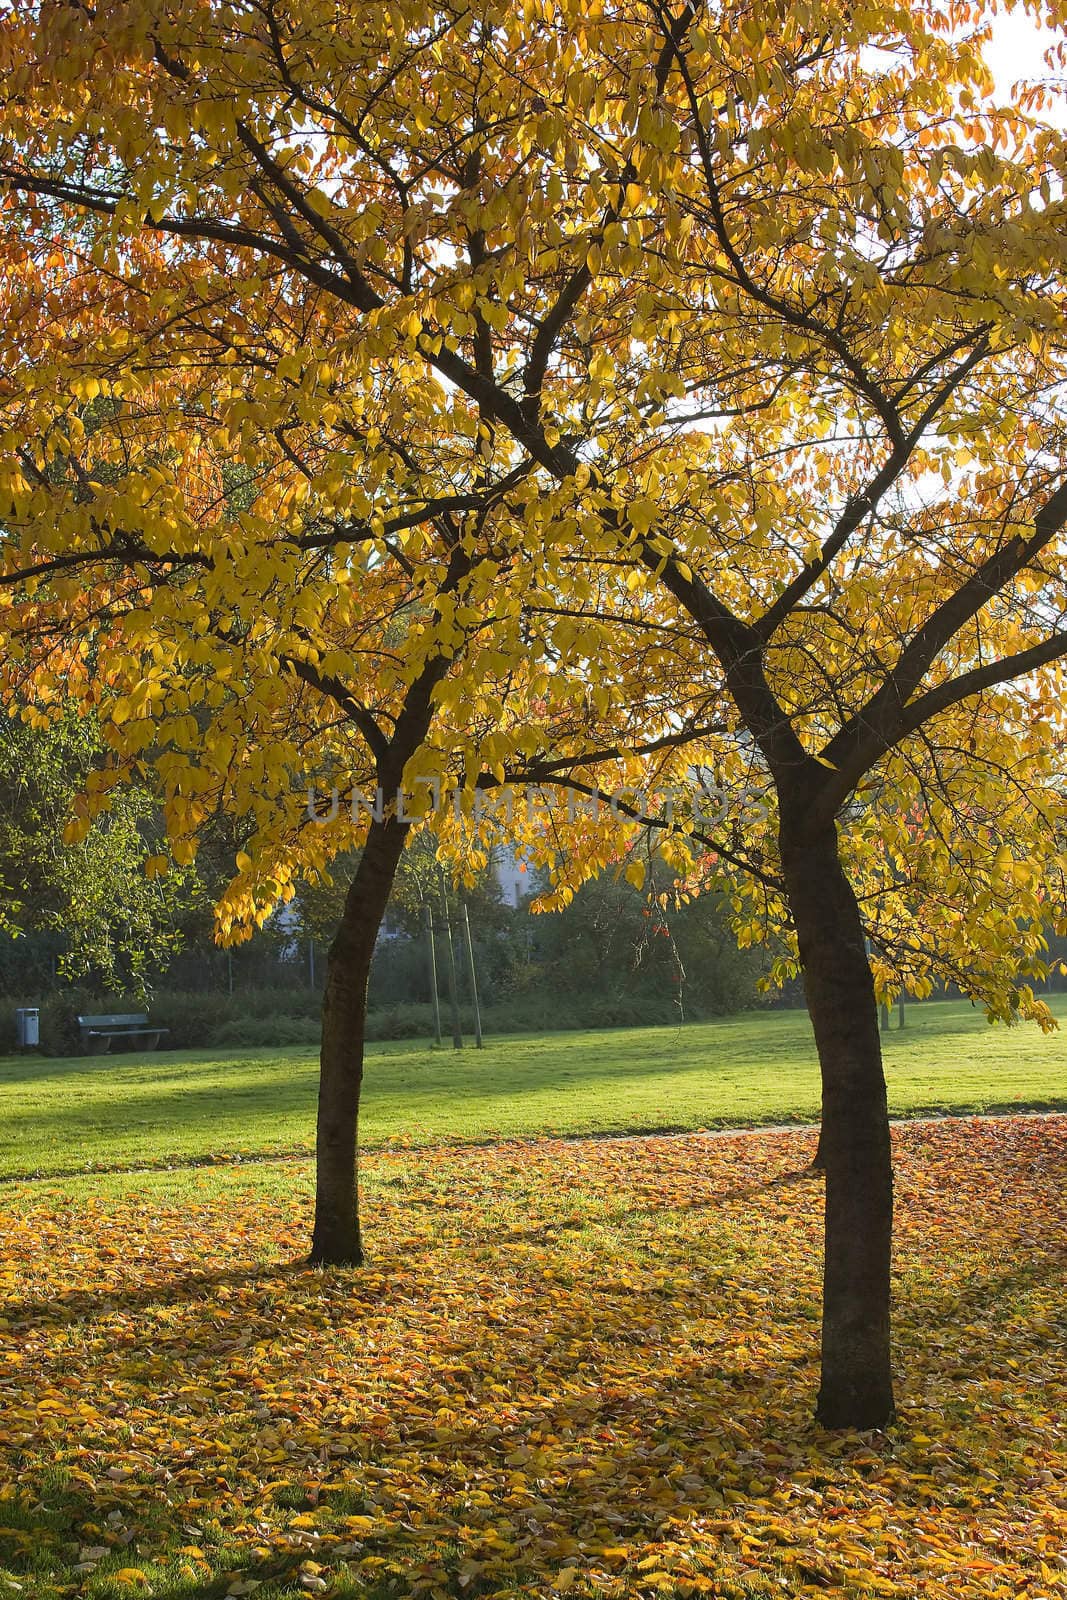 autumn in the park by miradrozdowski